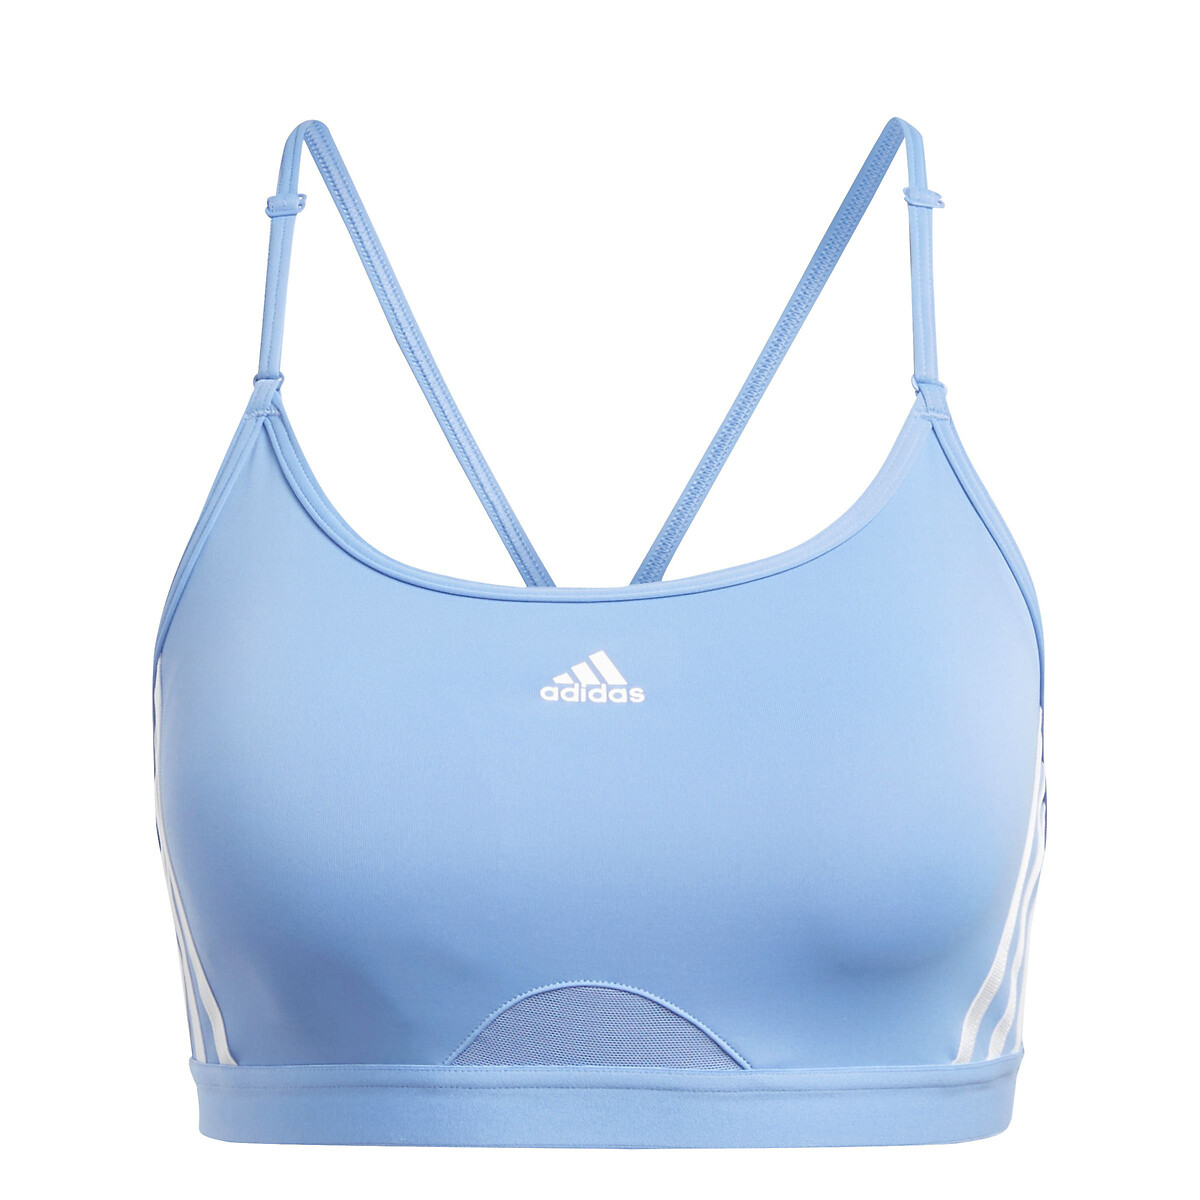 Adidas Graphic Blue Sports Bra Size XL - 65% off